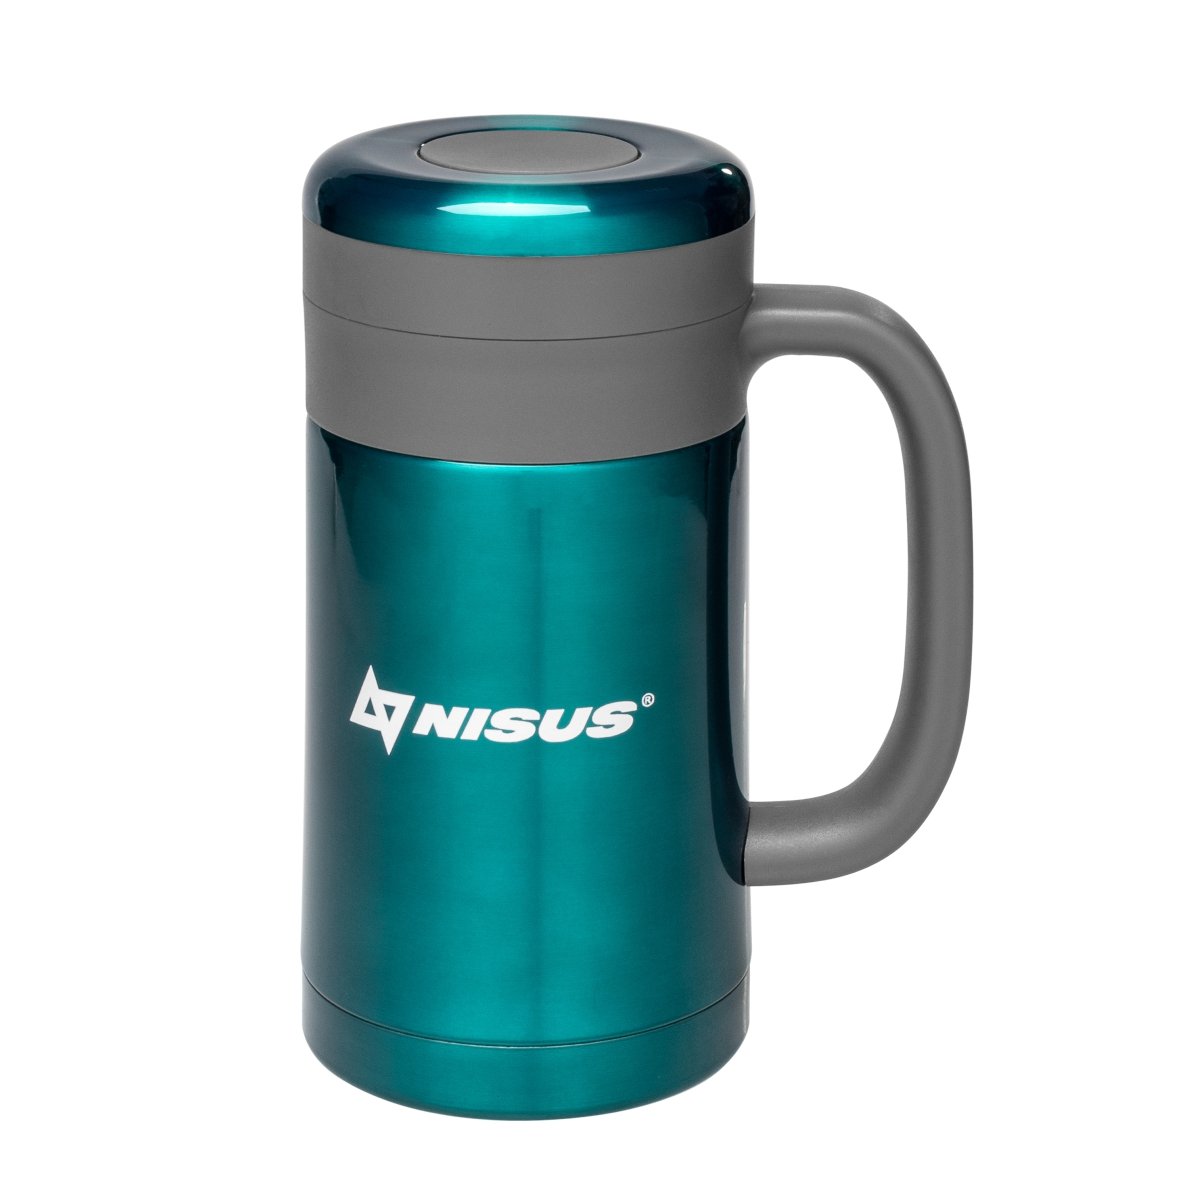 Nisus Insulated Travel Mug with Tea Infuser, Green, 15 oz